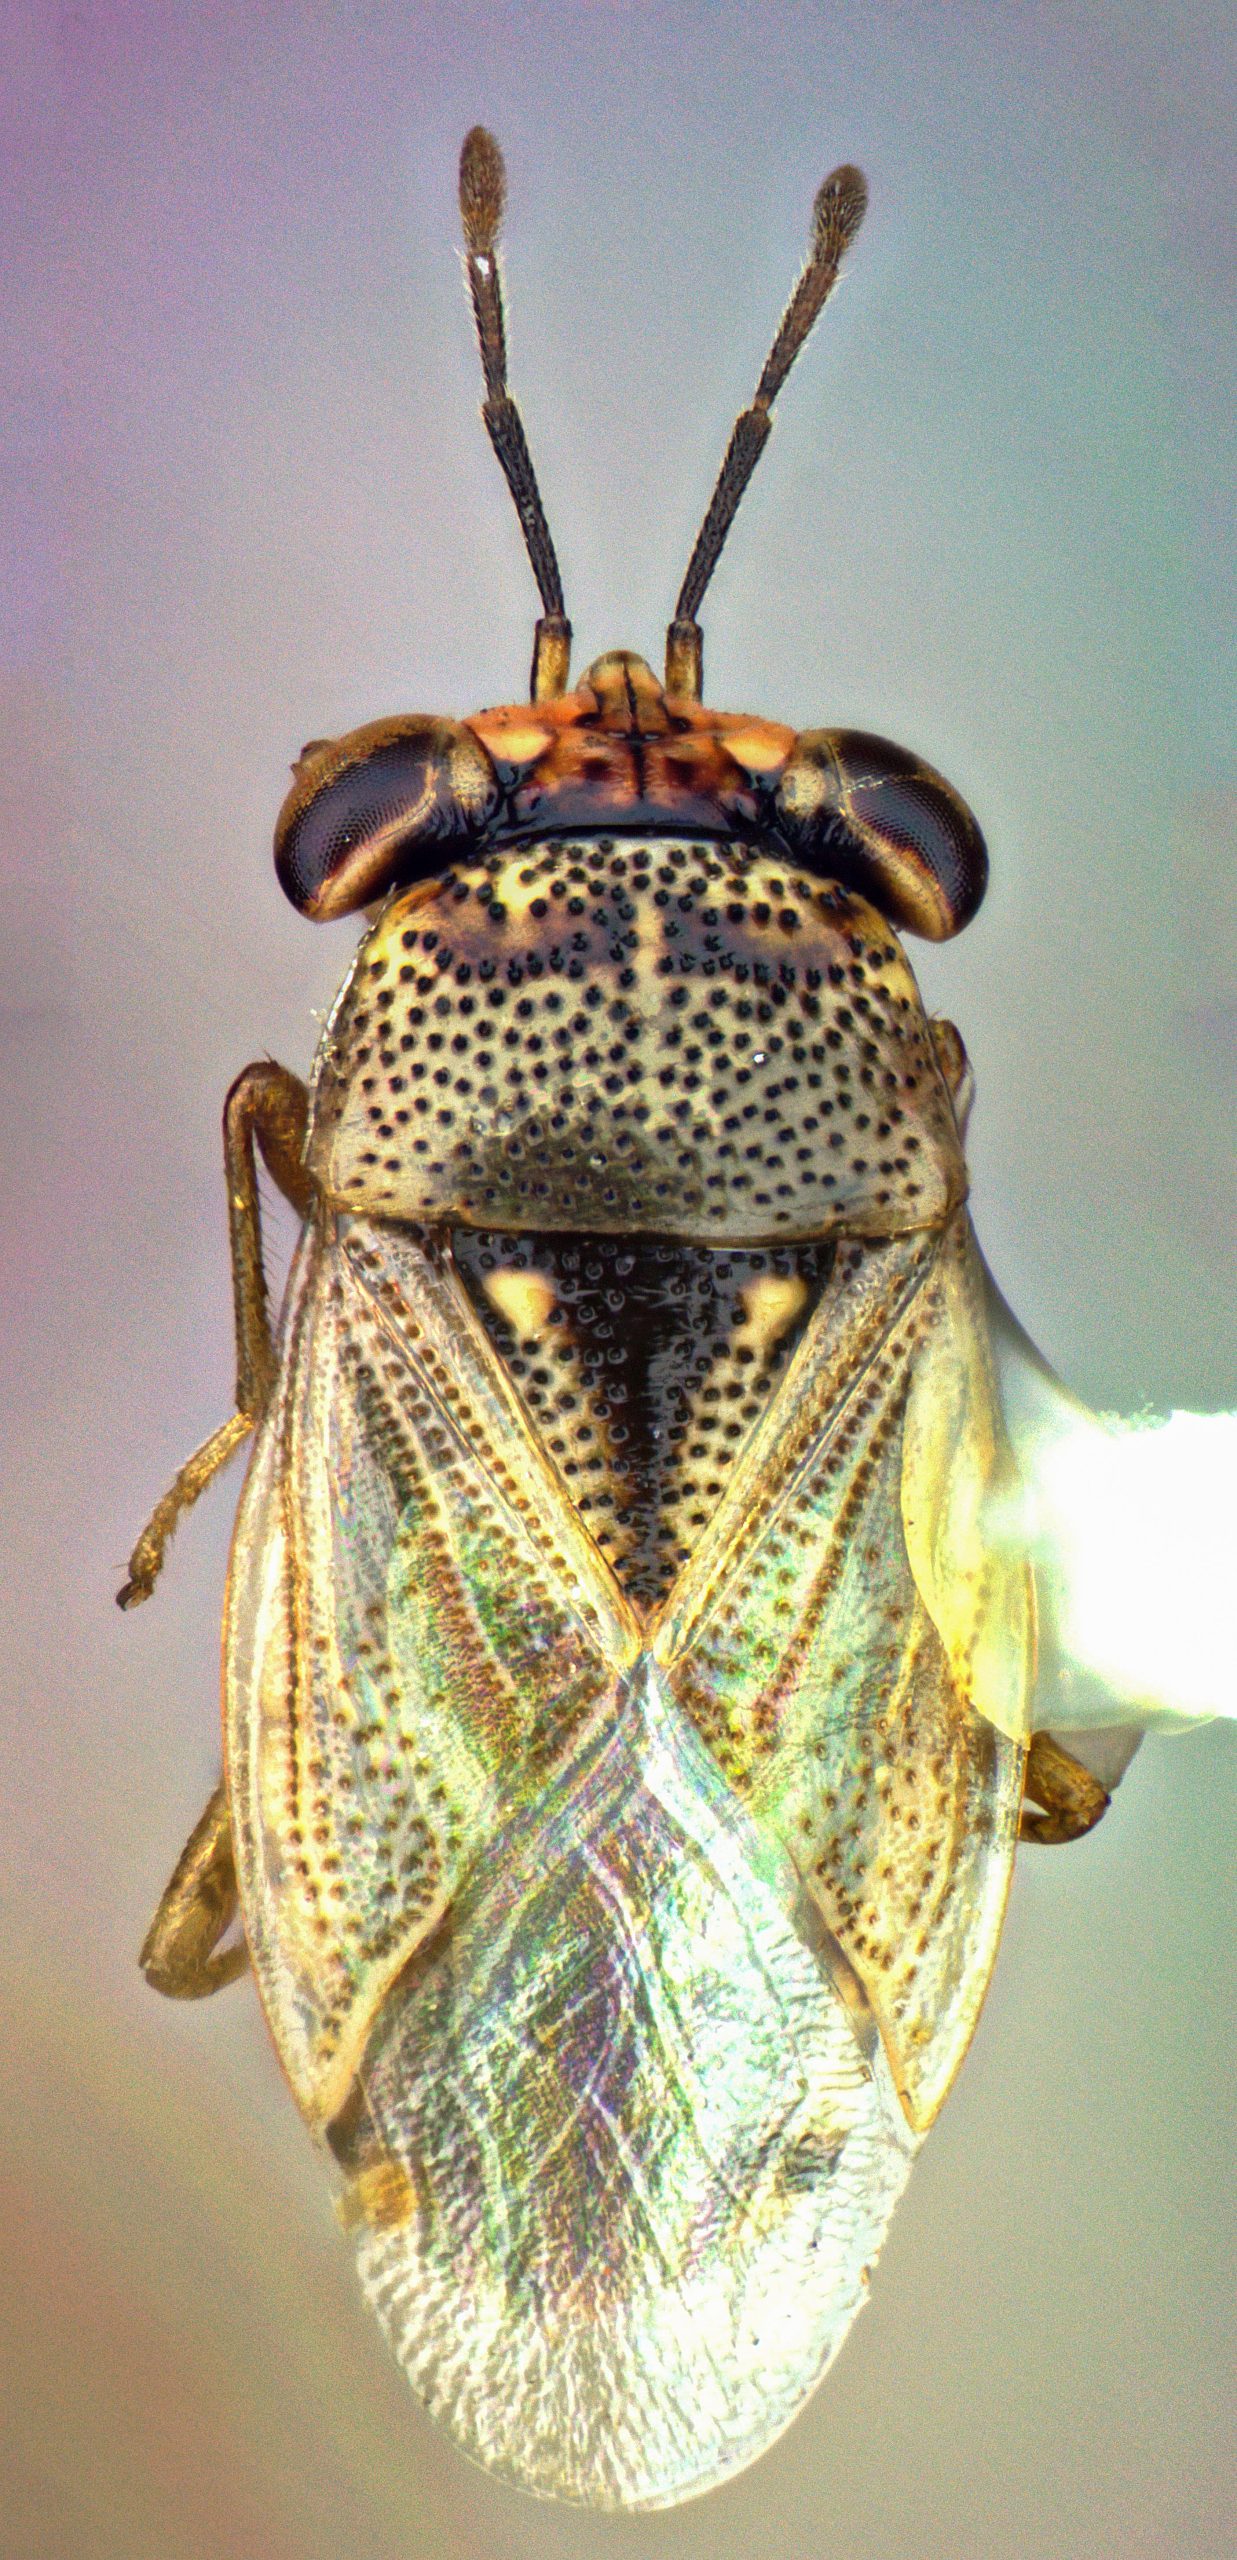 Big-eyed bug (Geocoris sp.)